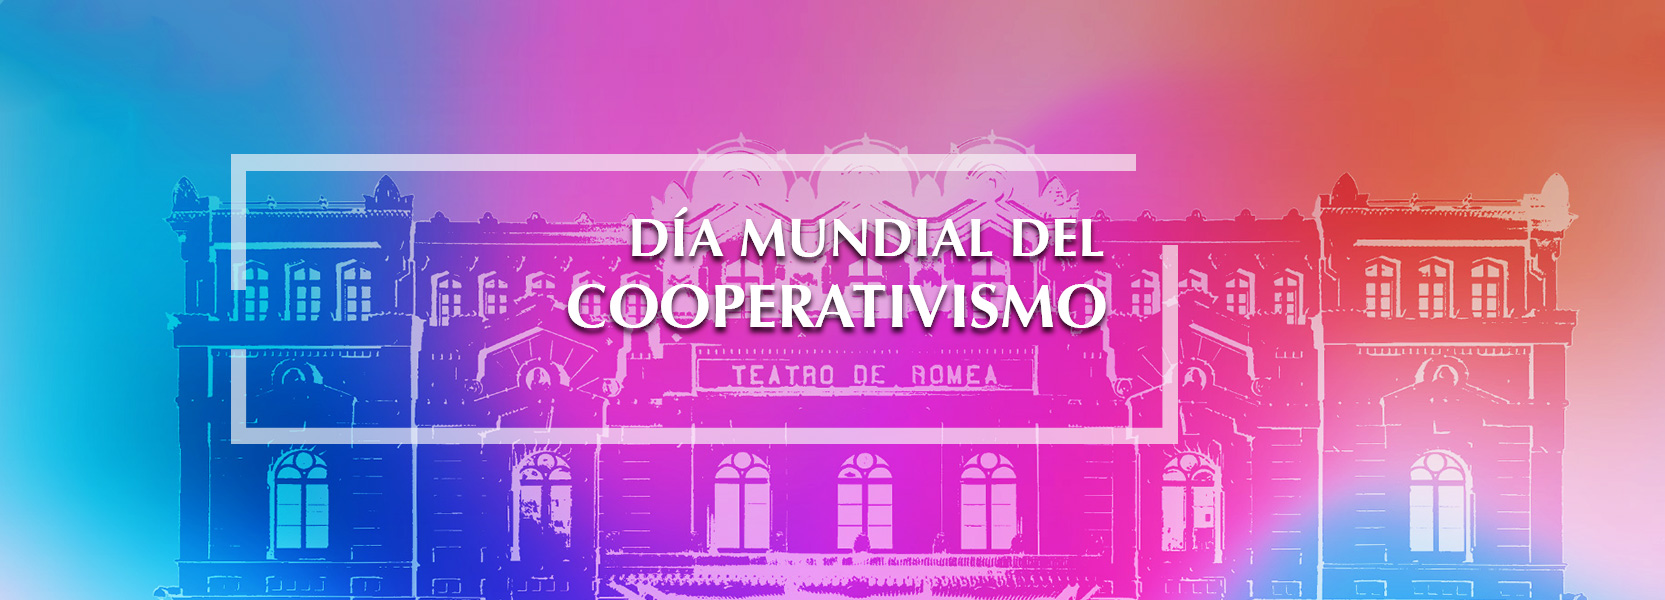 XXXI Día Mundial del Cooperativismo